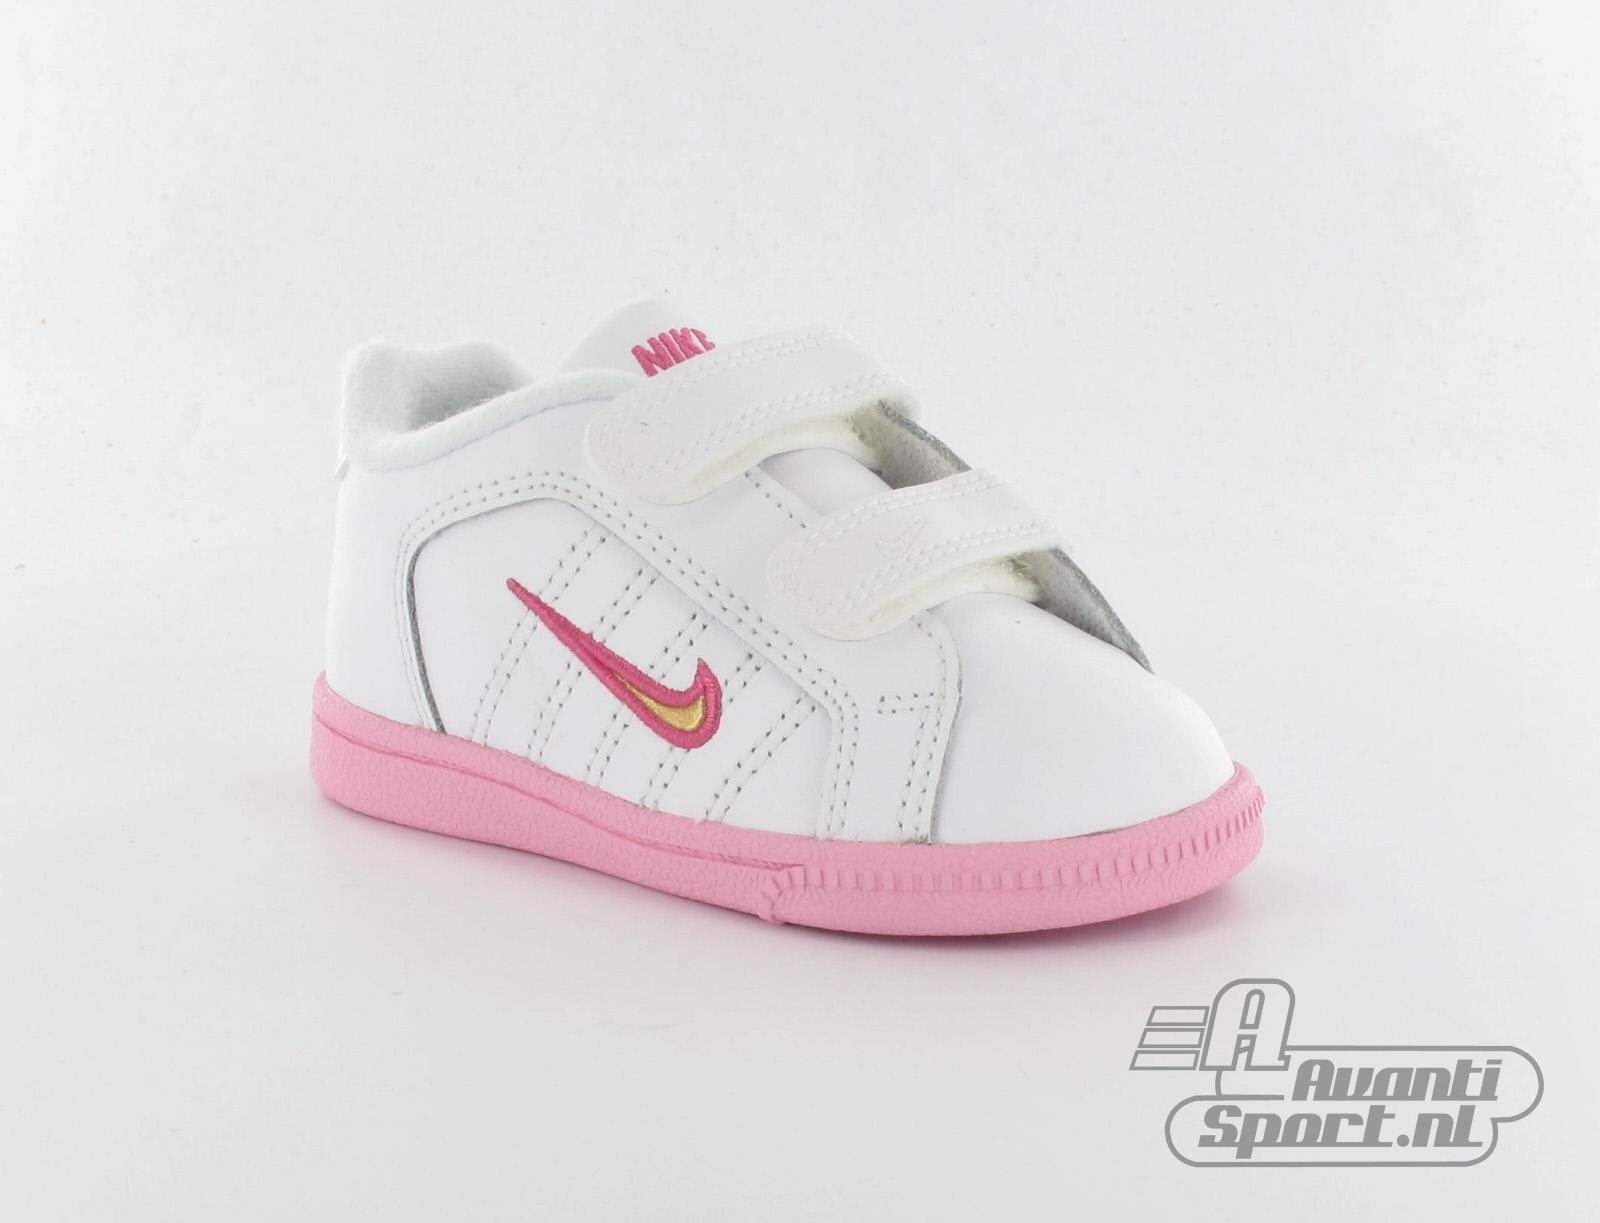 Avantisport - Nike - Court Tradition 2 Plus - Nike Kindersneakers